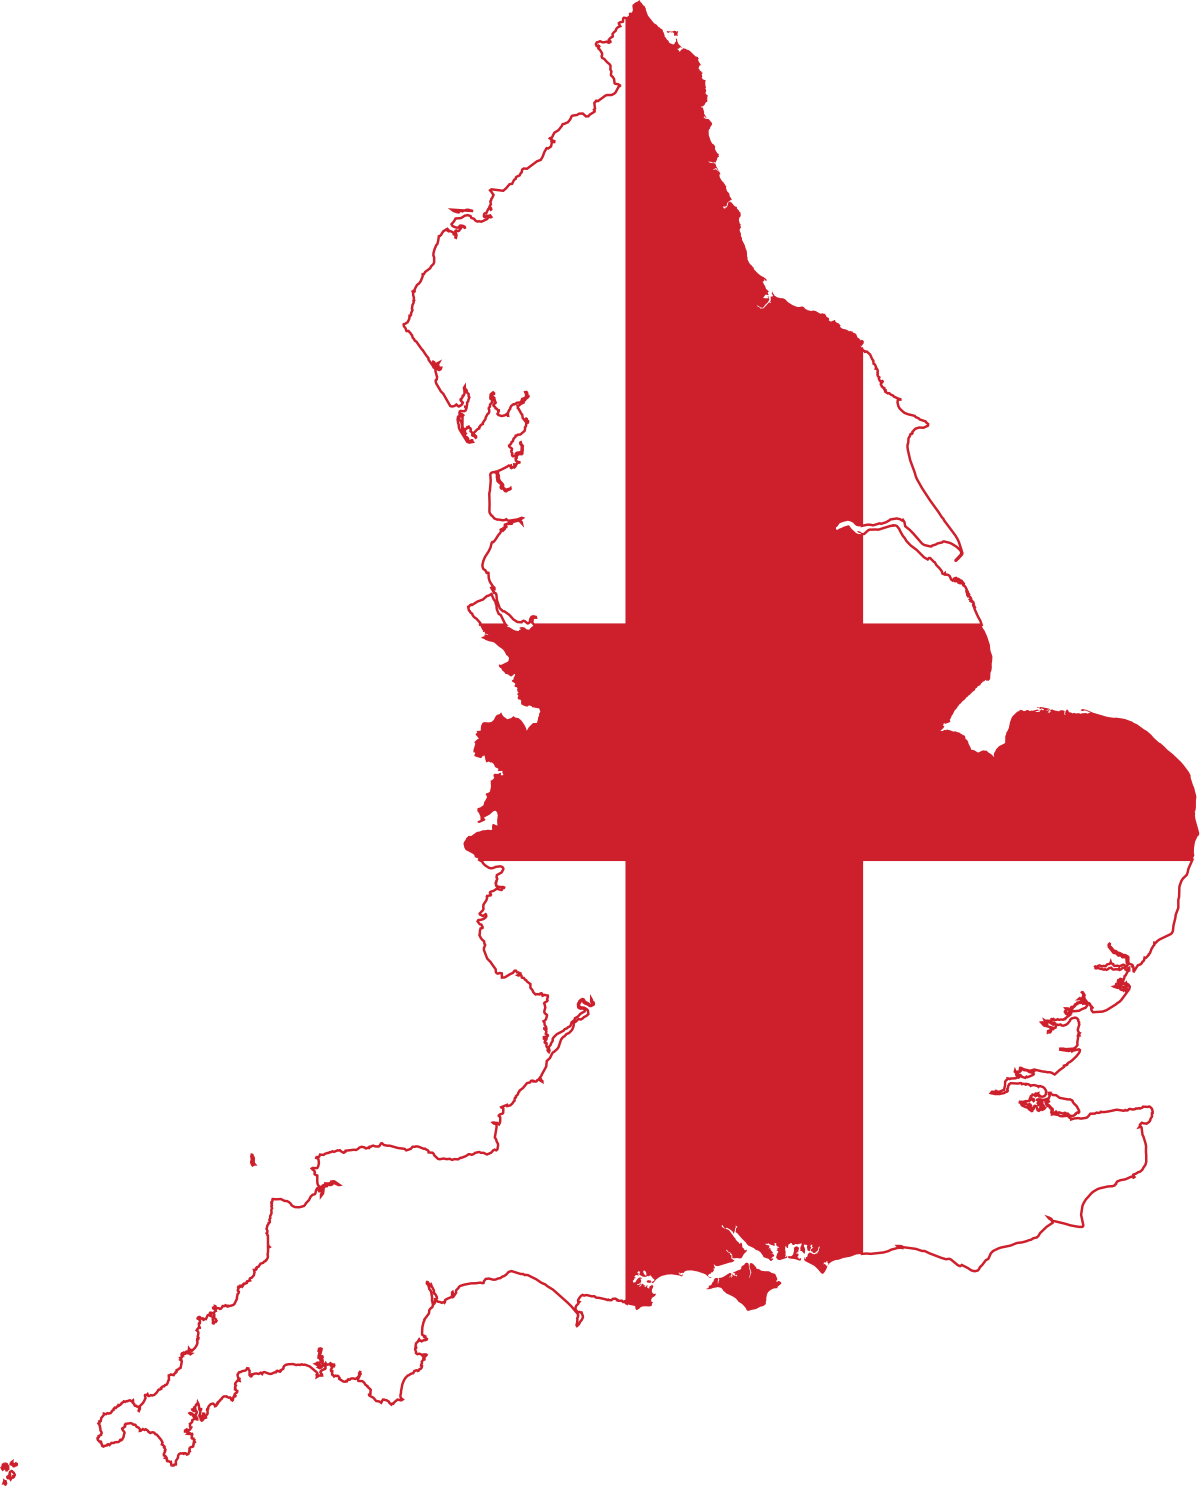 Historical Flag of England Set Into Shape of England